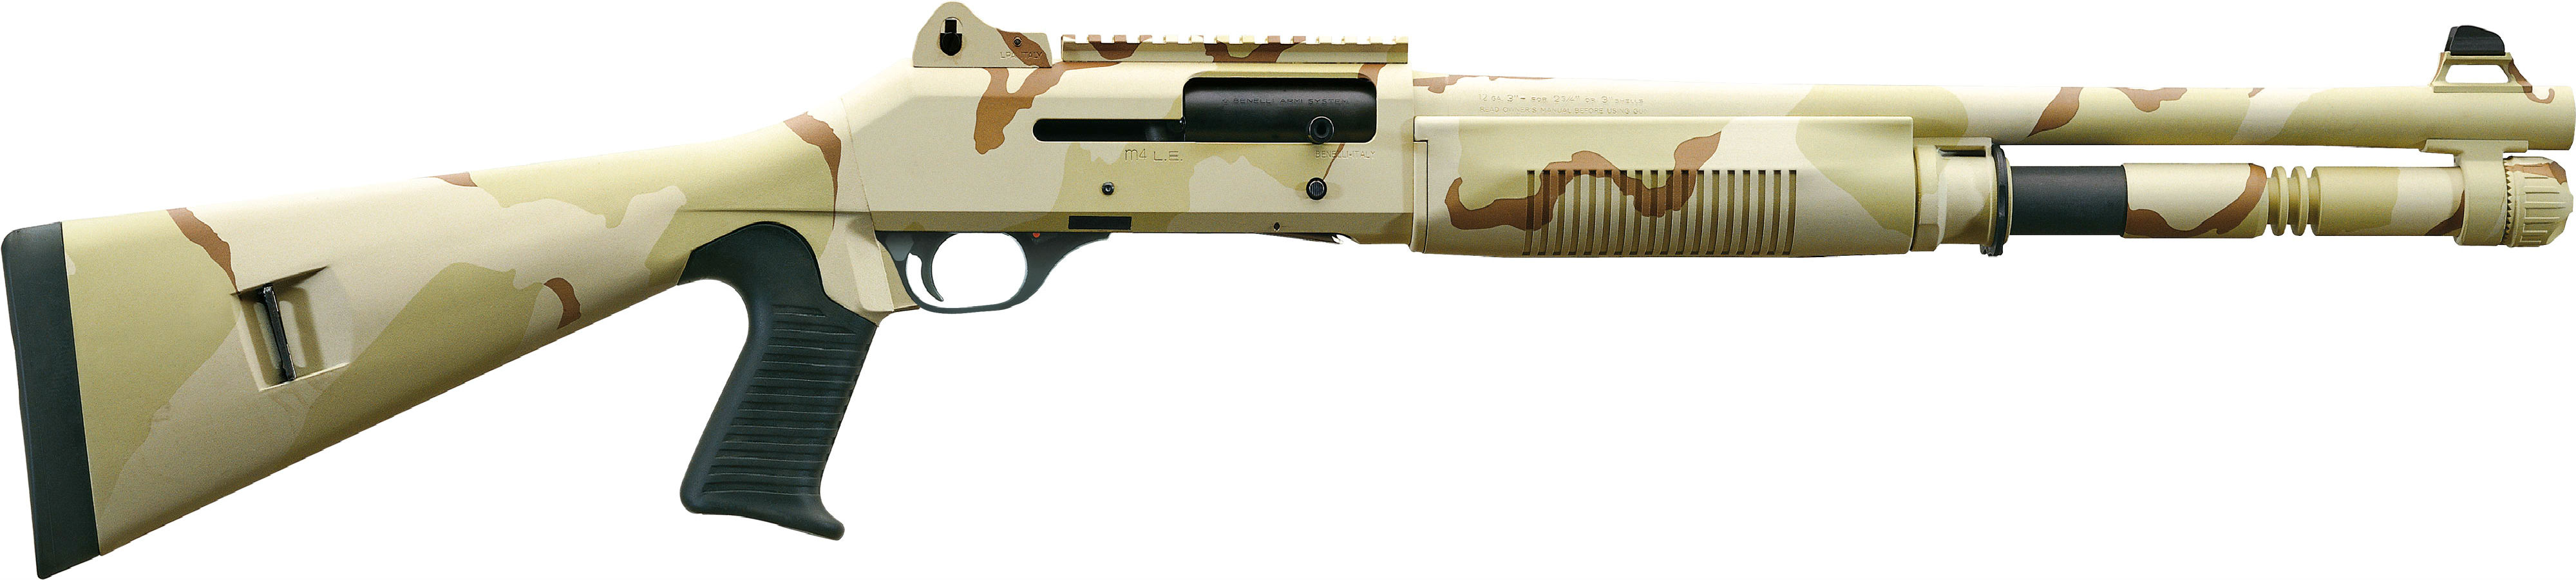 Benelli M Super90 Weapon Gun Military Shotgun Te Wallpaper